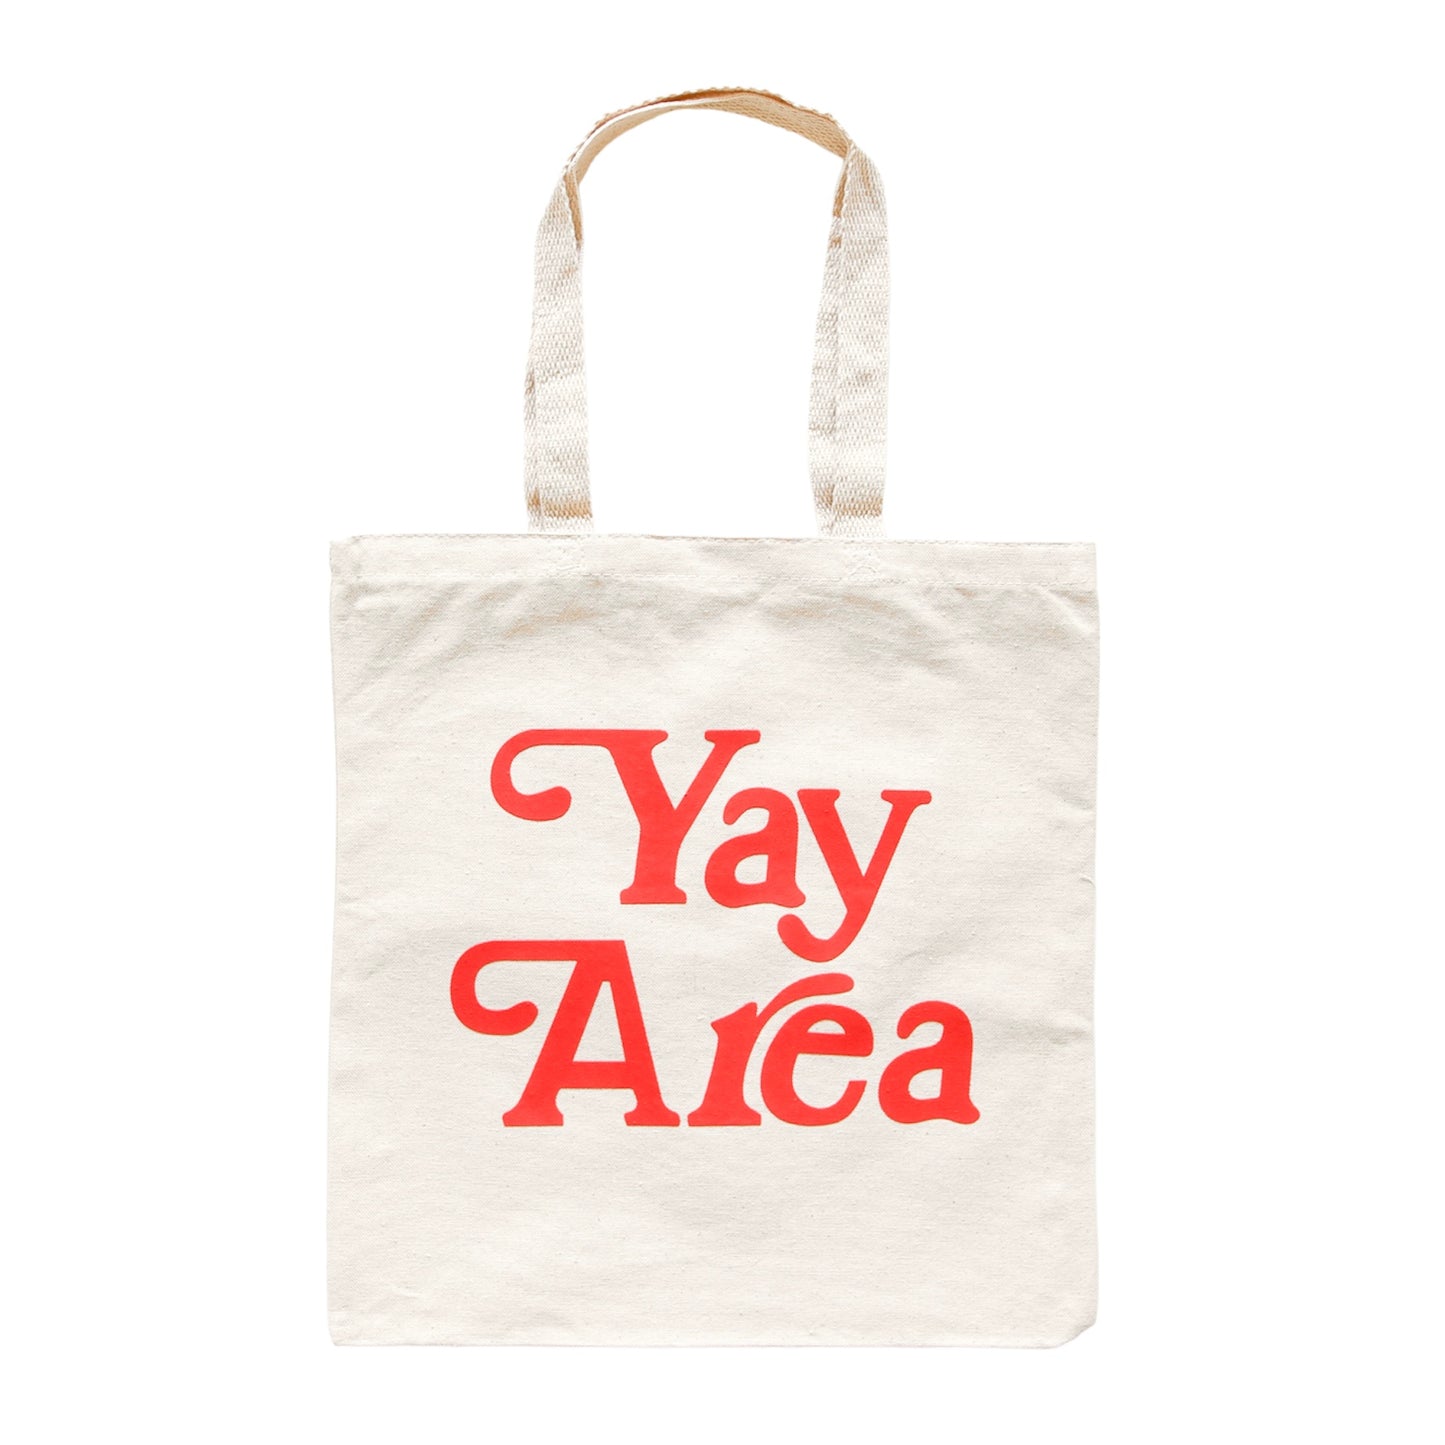 Cream “Yay Area” Tote Bag